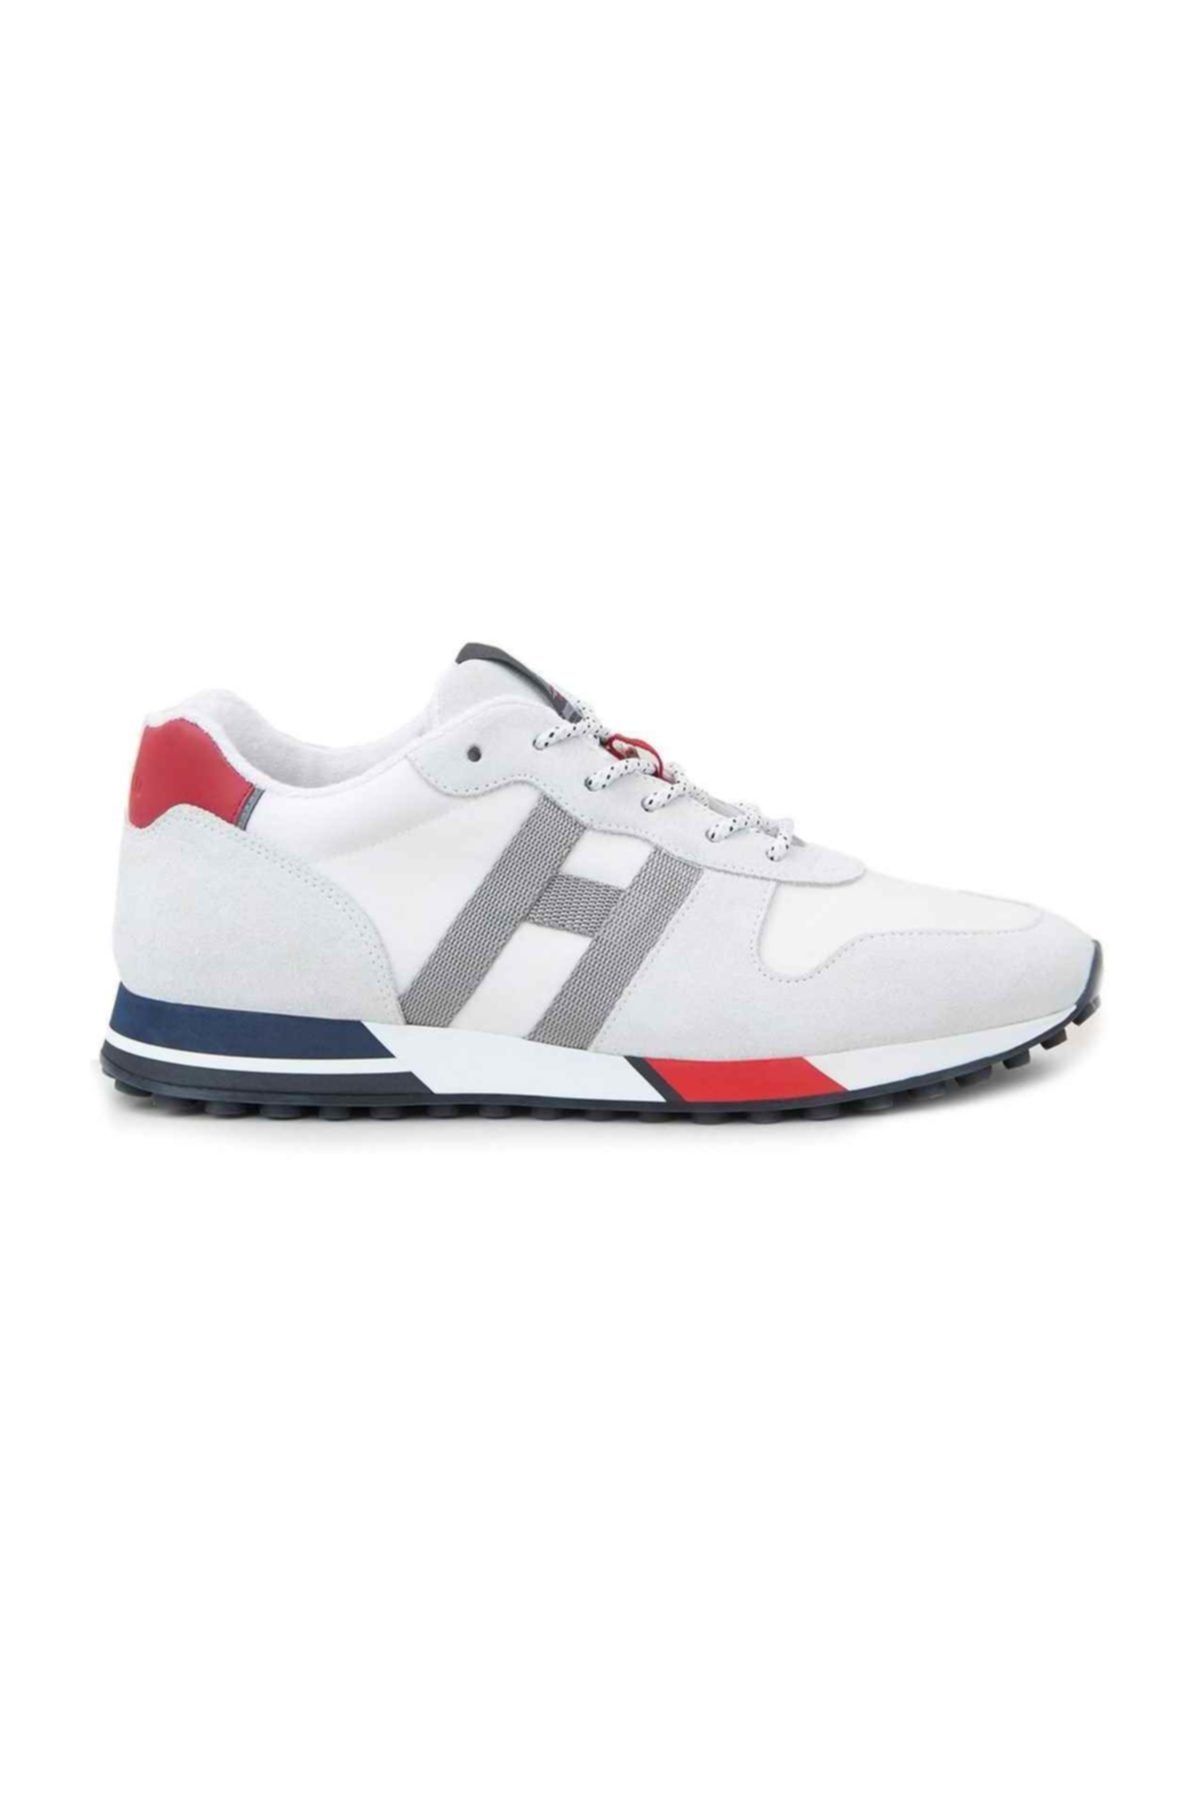 HOGAN H383 Sneaker Ayakkabı